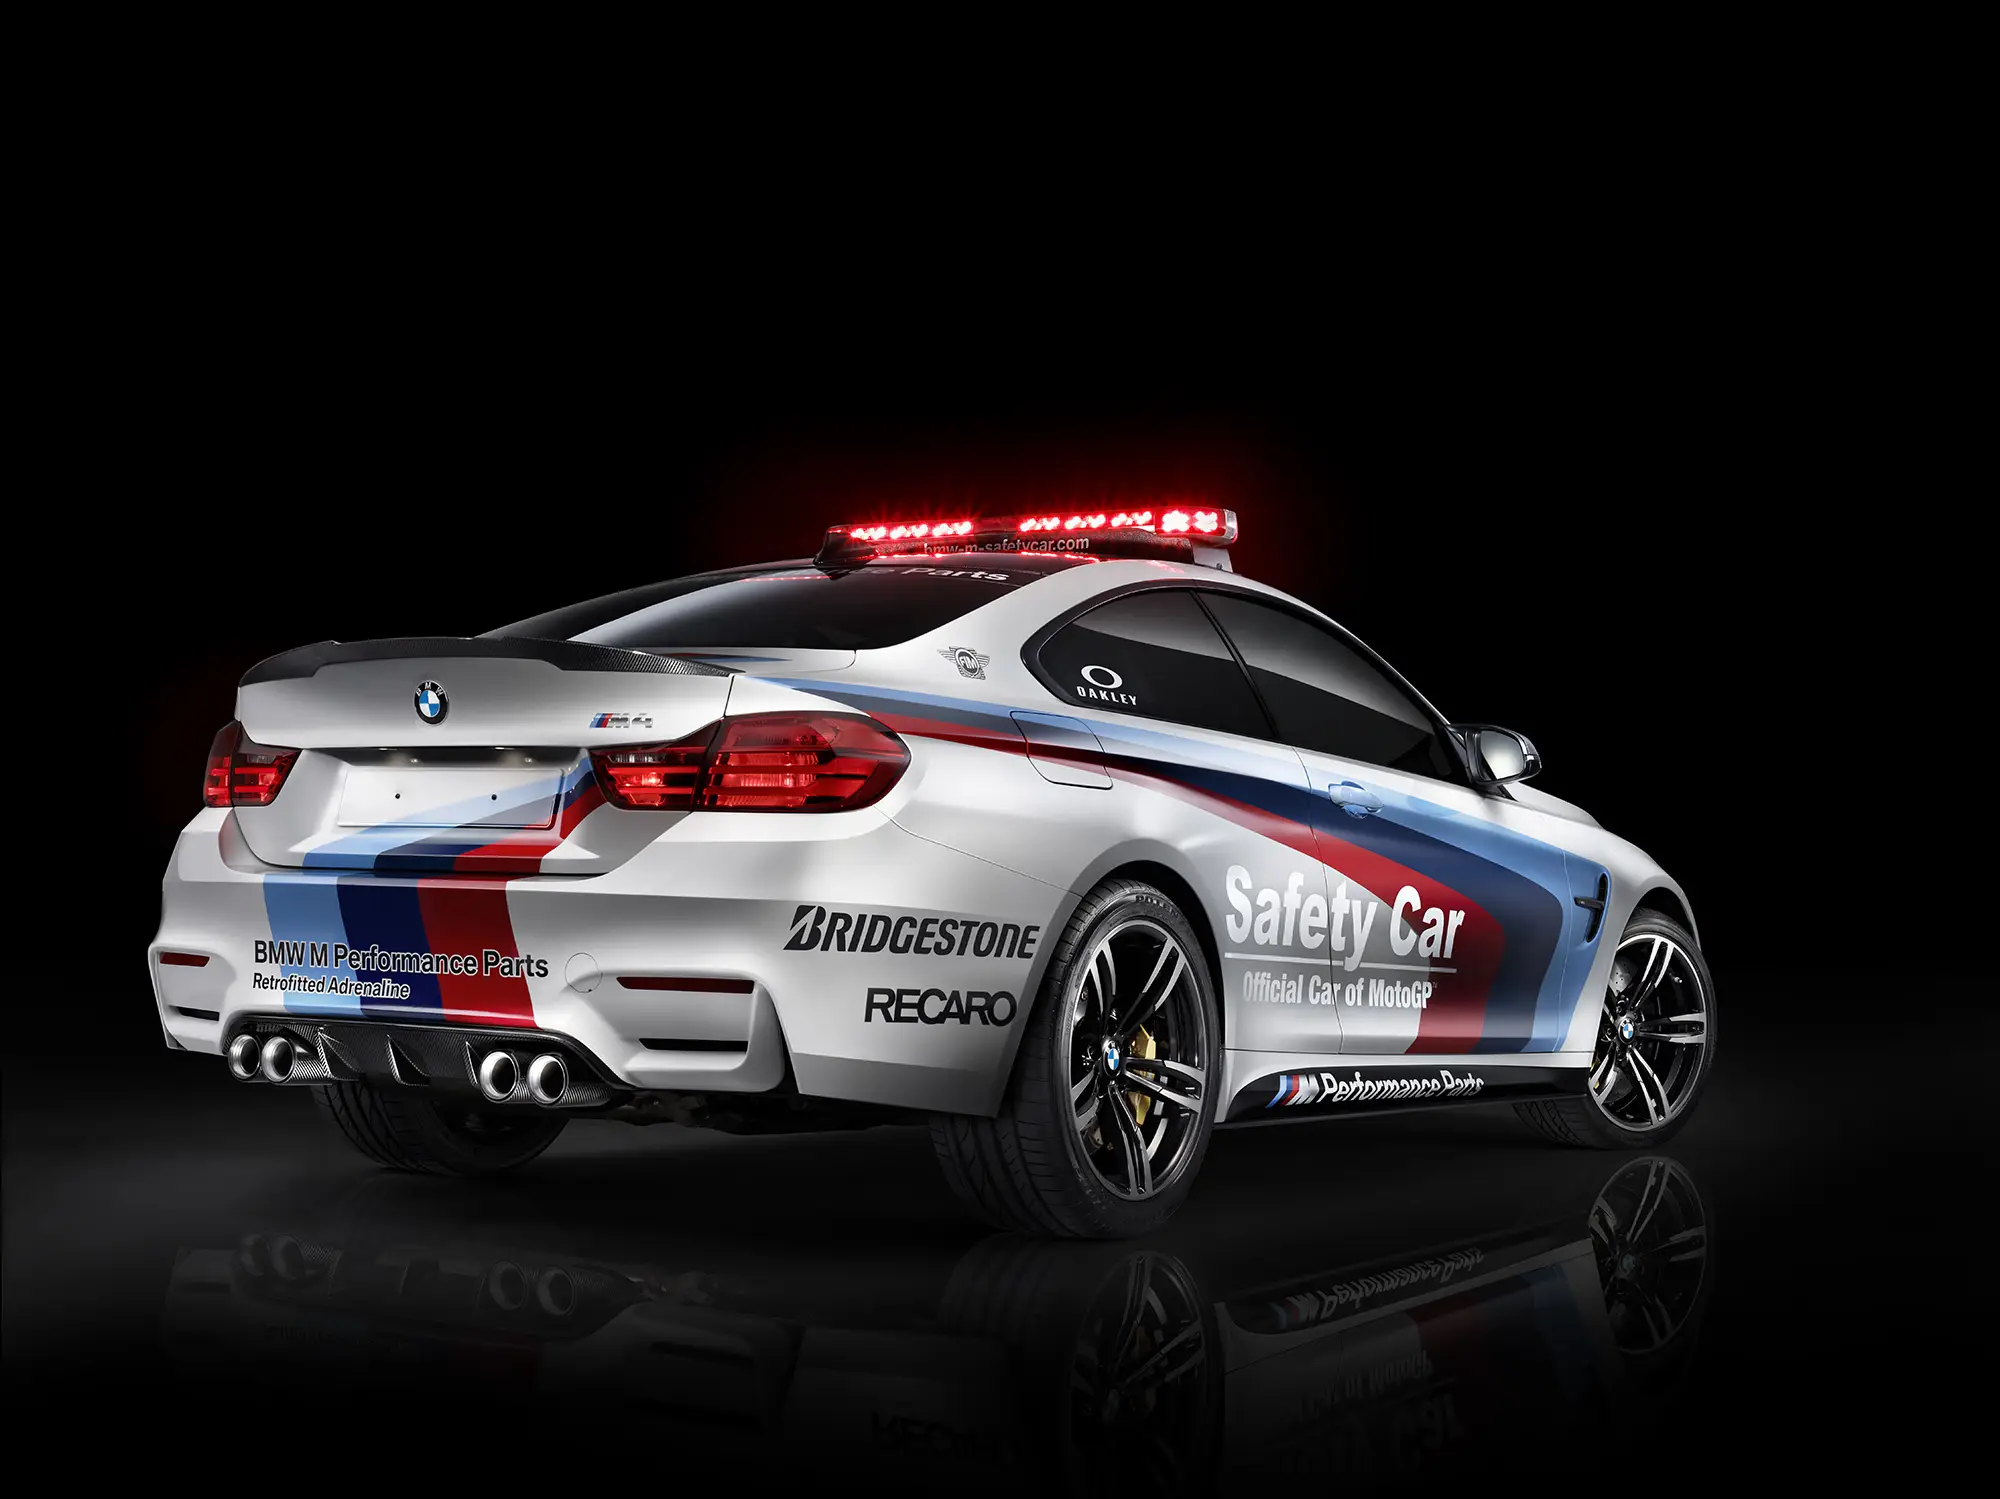 BMW M4 Coupe - Safety Car MotoGP 2014 - 8